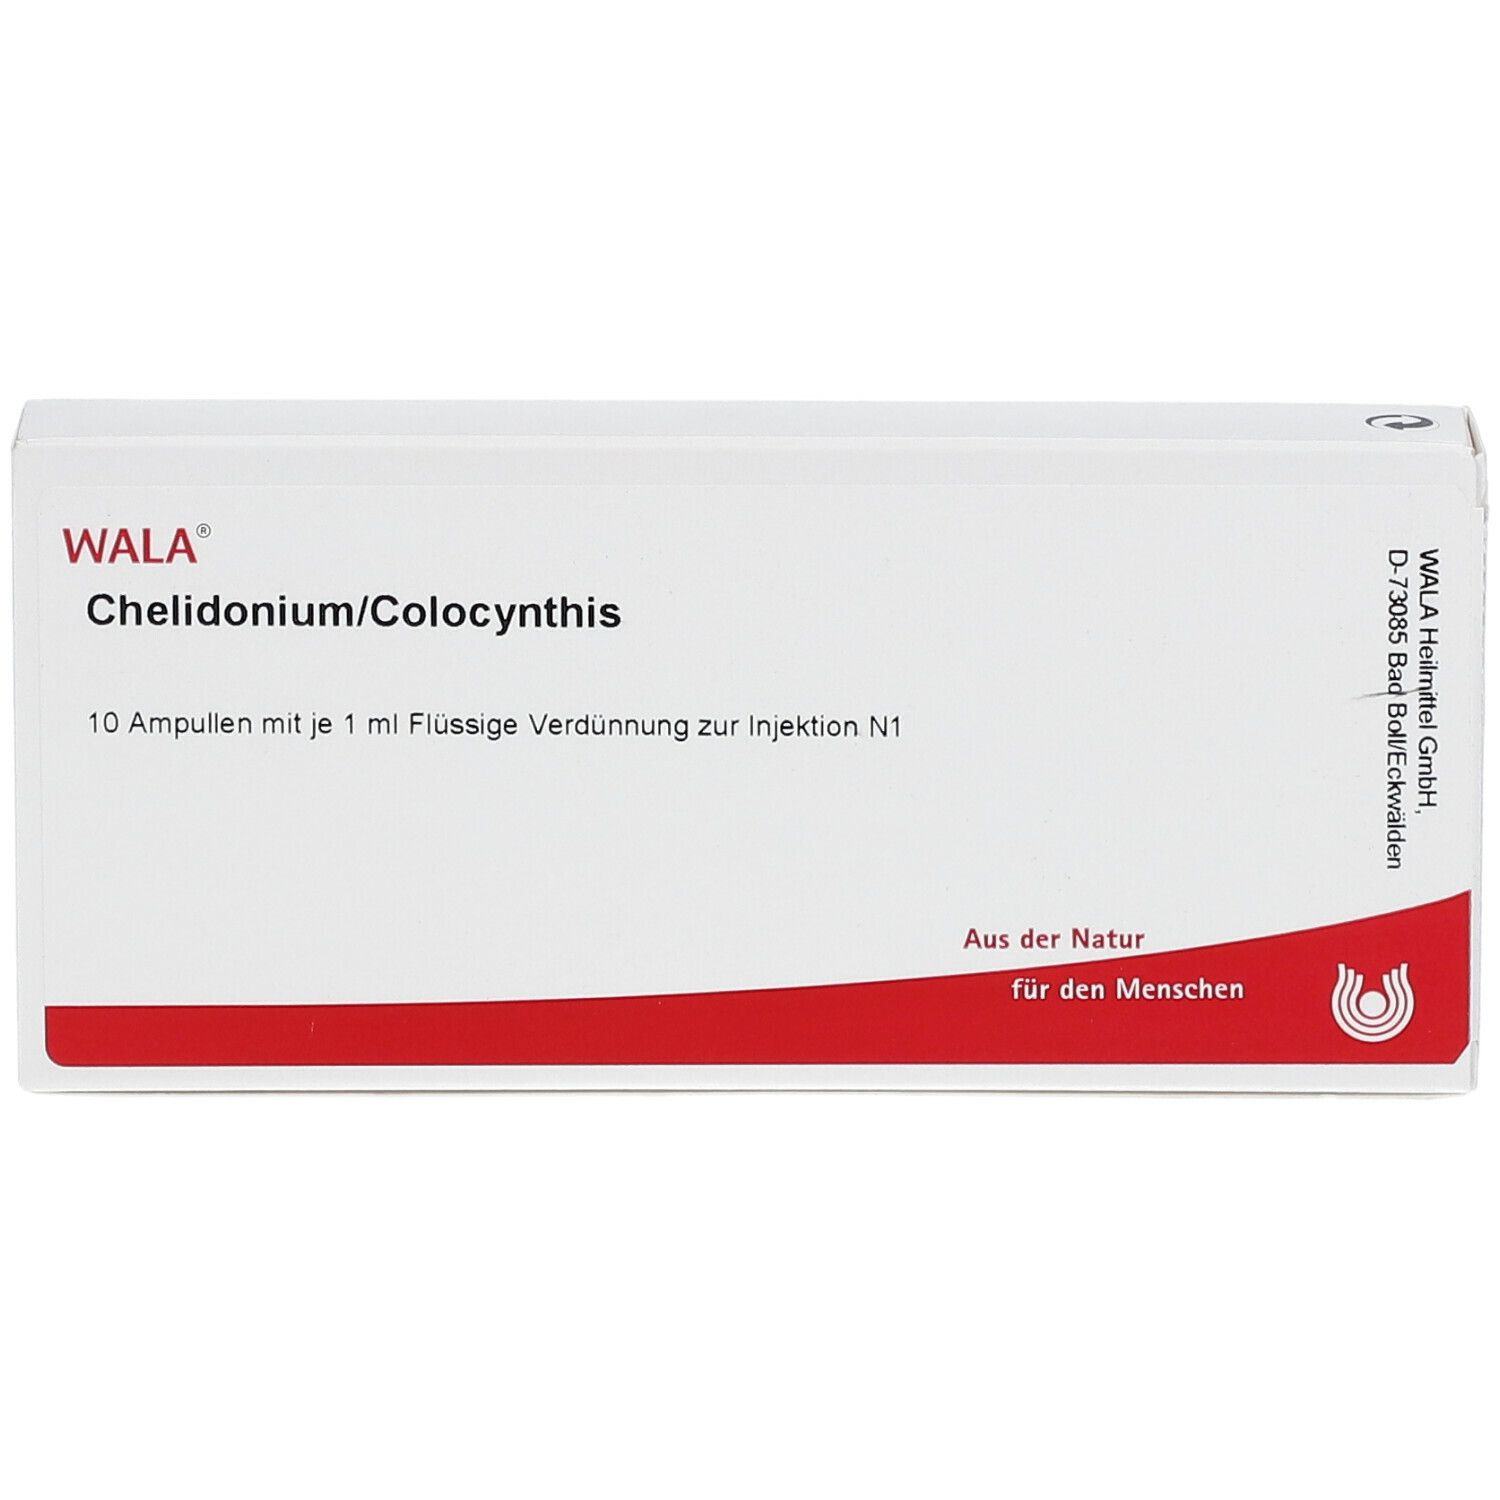 WALA® Chelidonium/Colocynthis